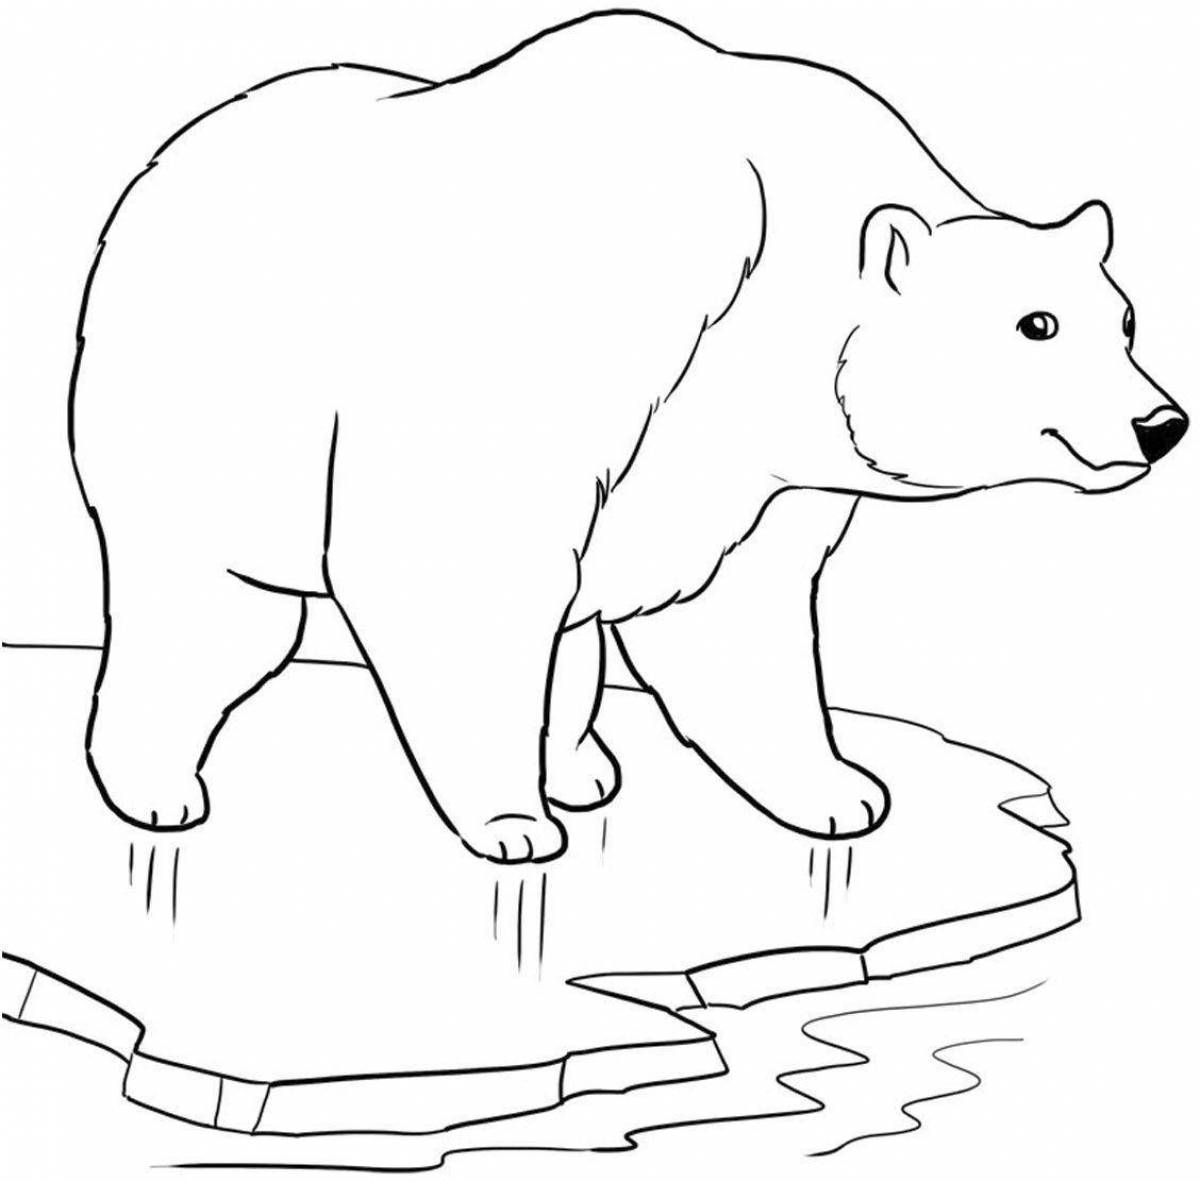 Northern bear #5